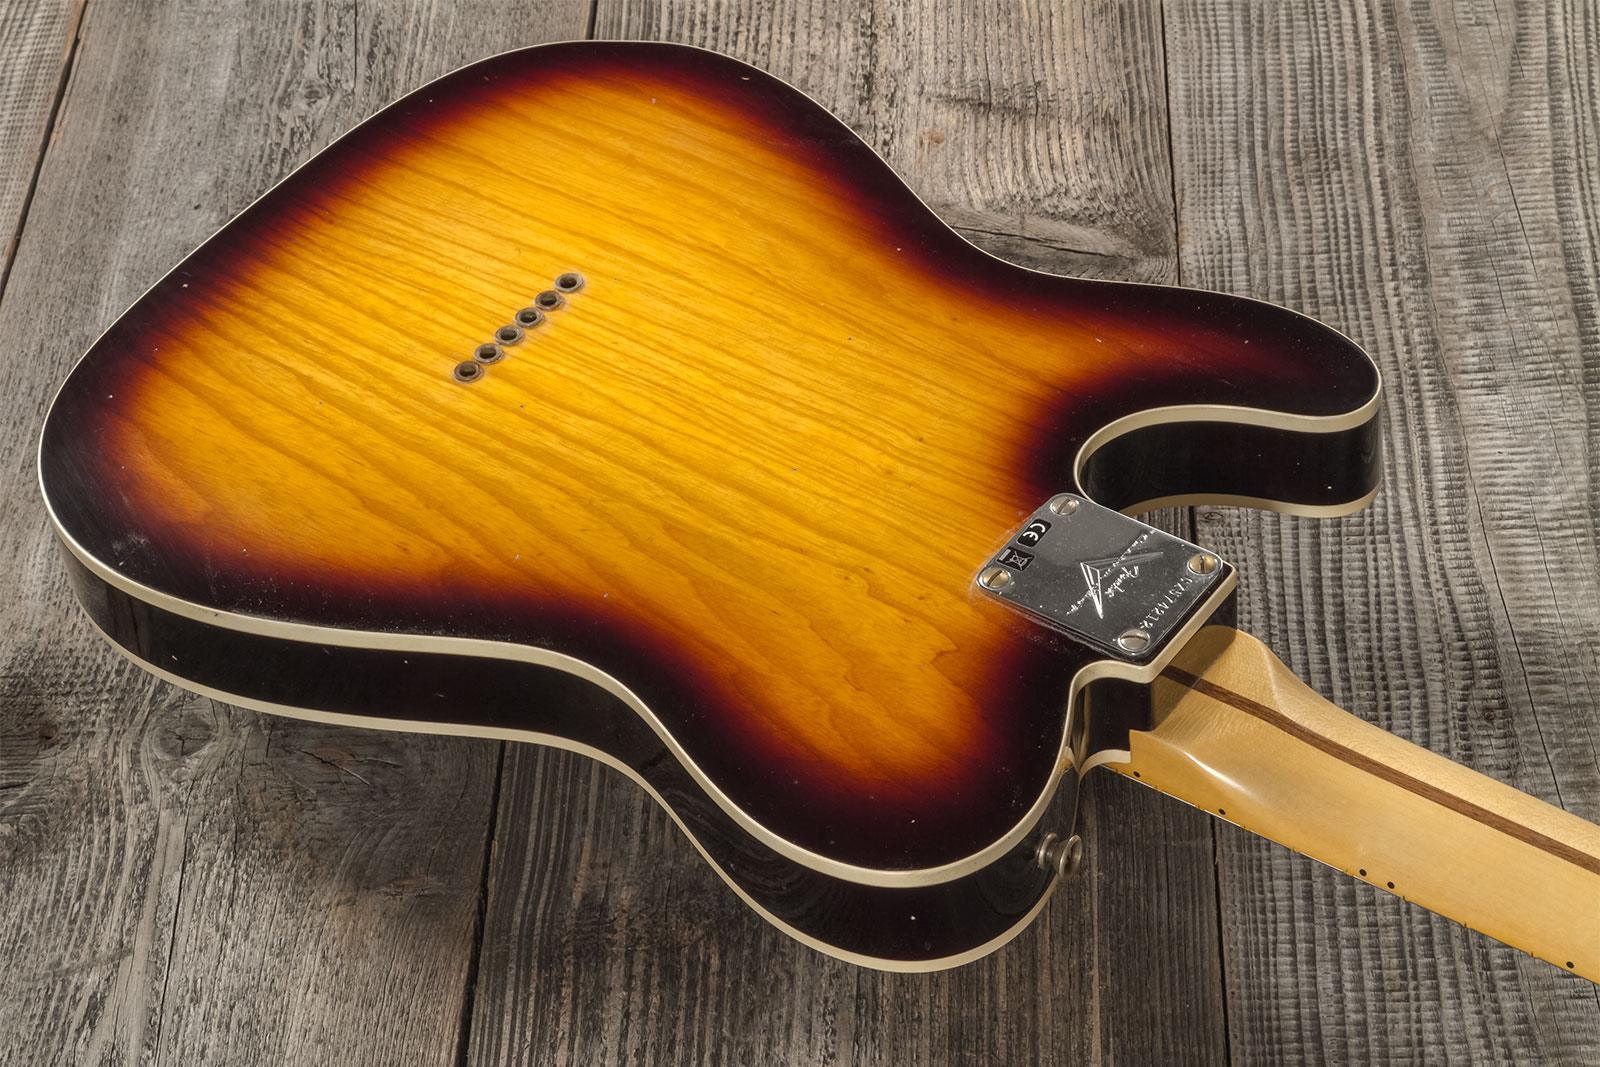 Fender Custom Shop Tele Thinline 50s Mn #cz574212 - Journeyman Relic Aged 2-color Sunburst - Tel shape electric guitar - Variation 6